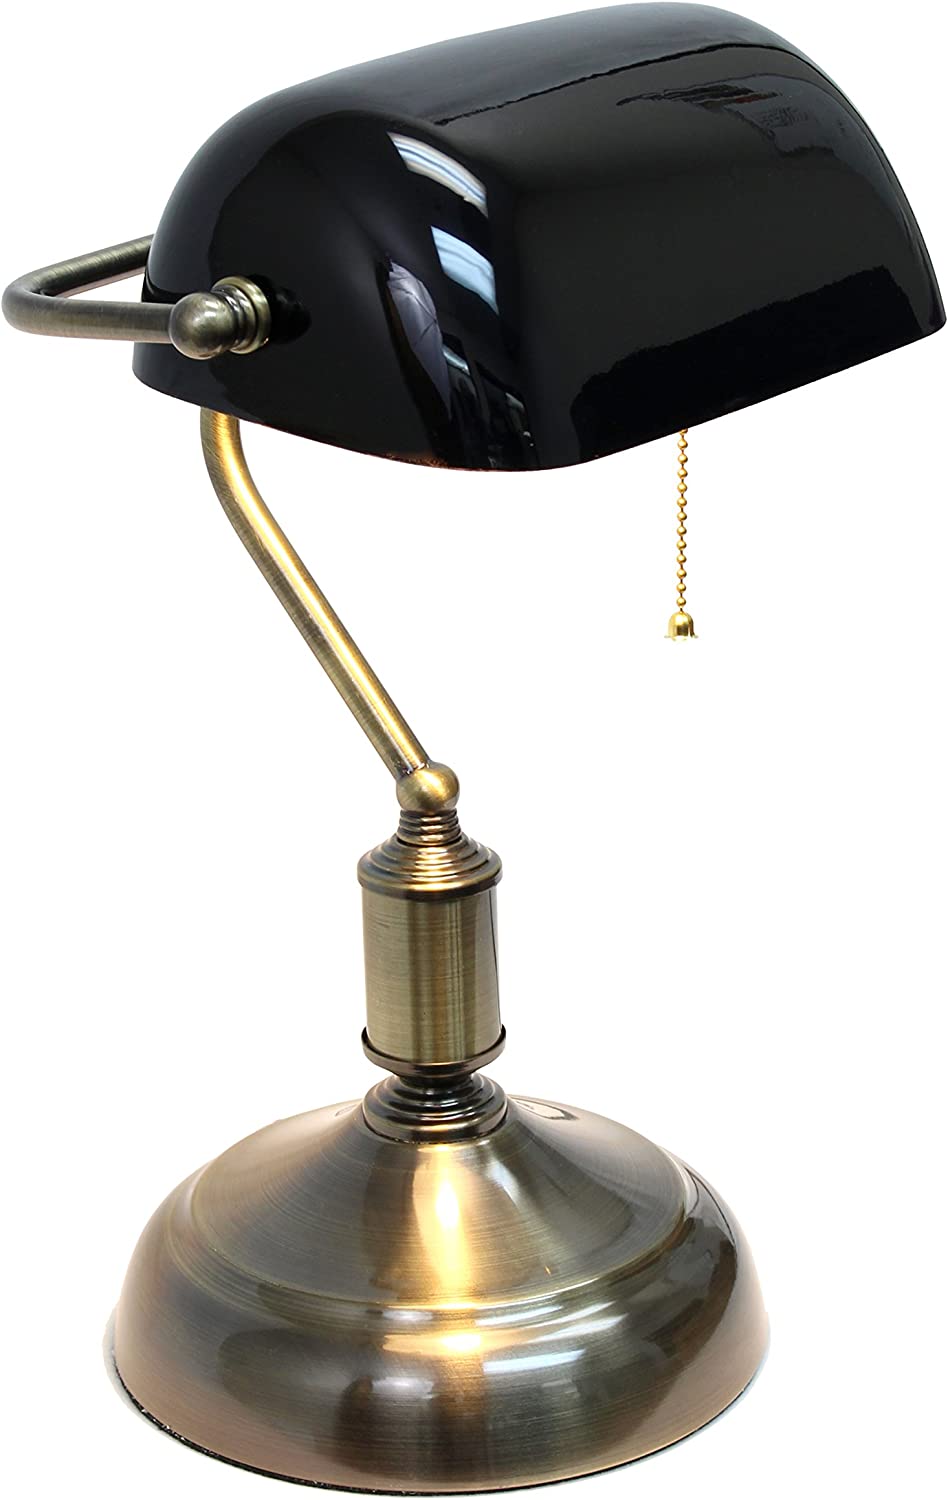 Simple Designs LT3216-BLK Executive Banker's Glass Shade, Desk Lamp, Antique Nickel/Black